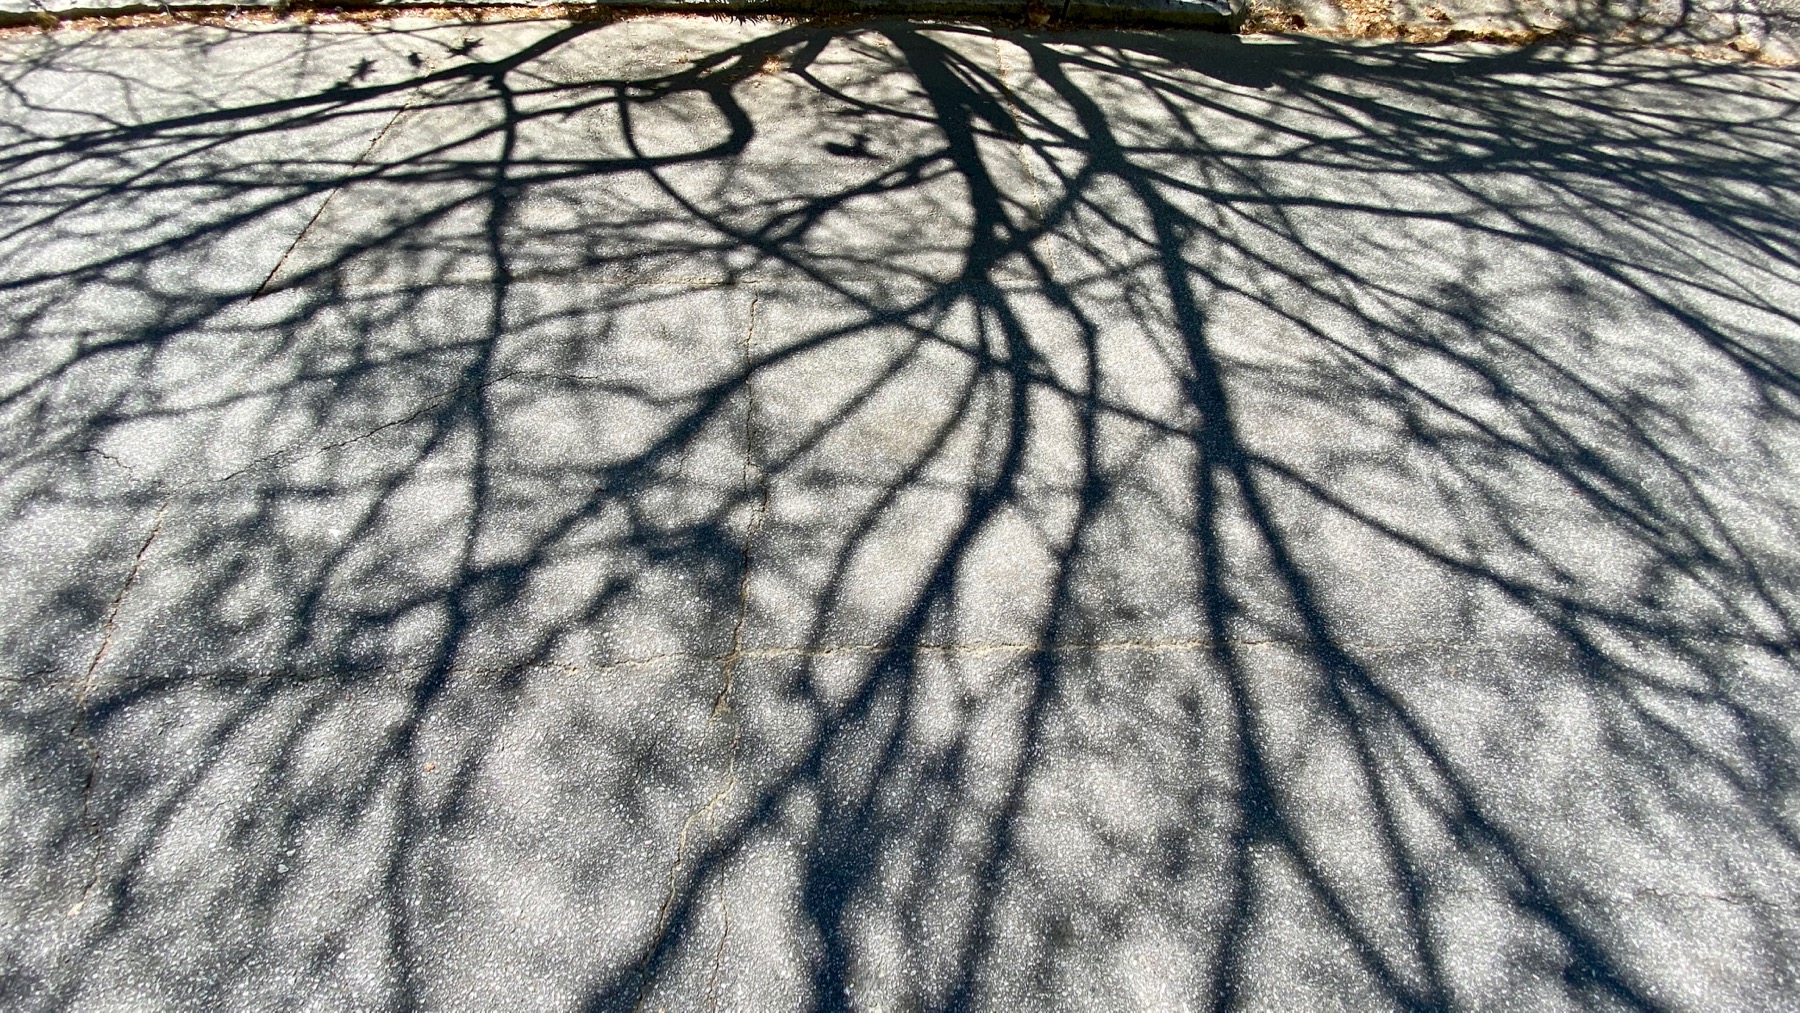 Branching shadows